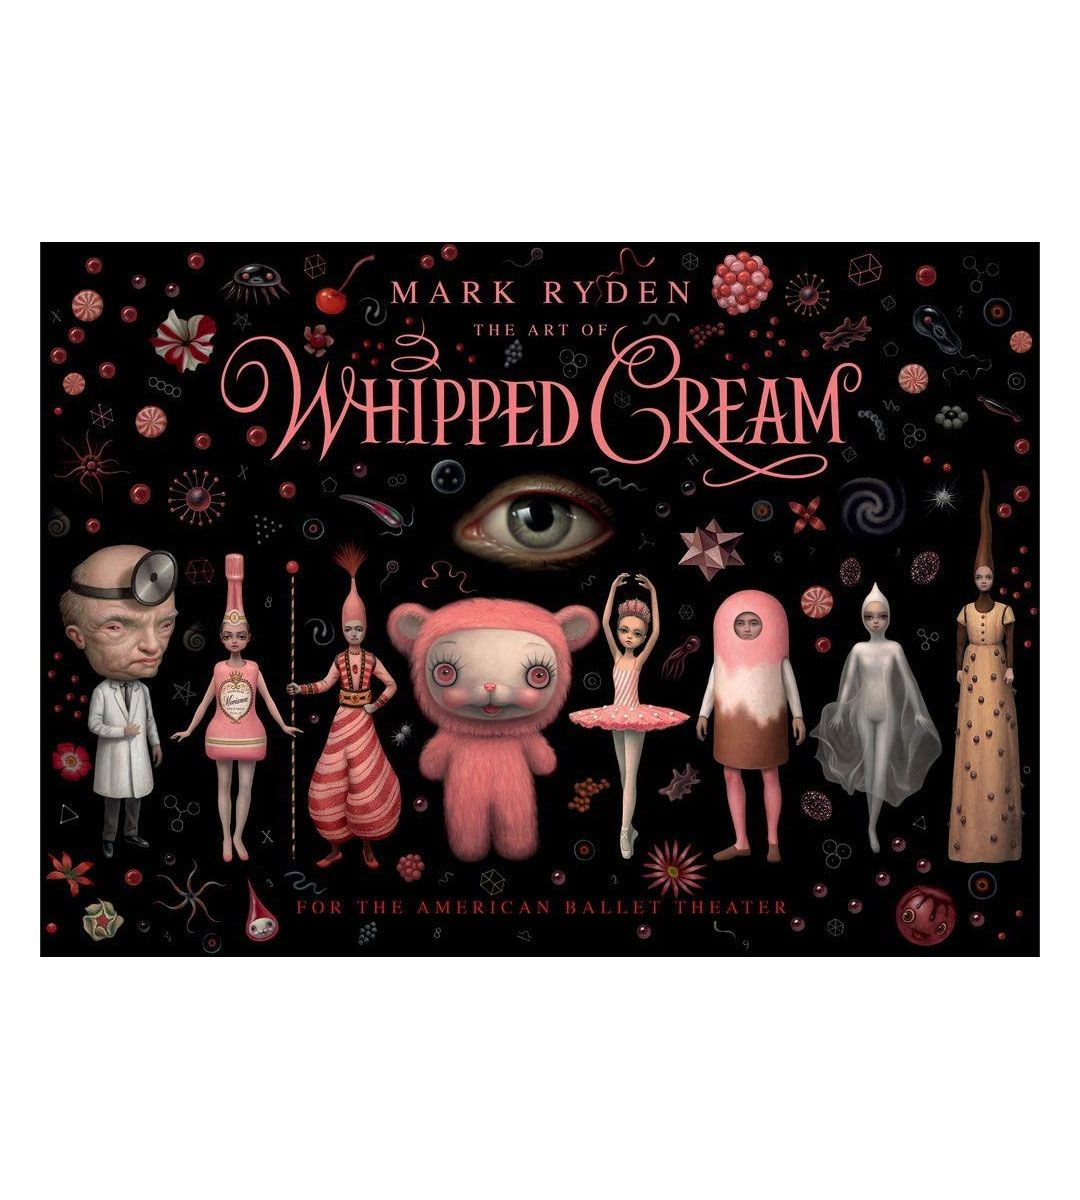 The art of Whipped Cream